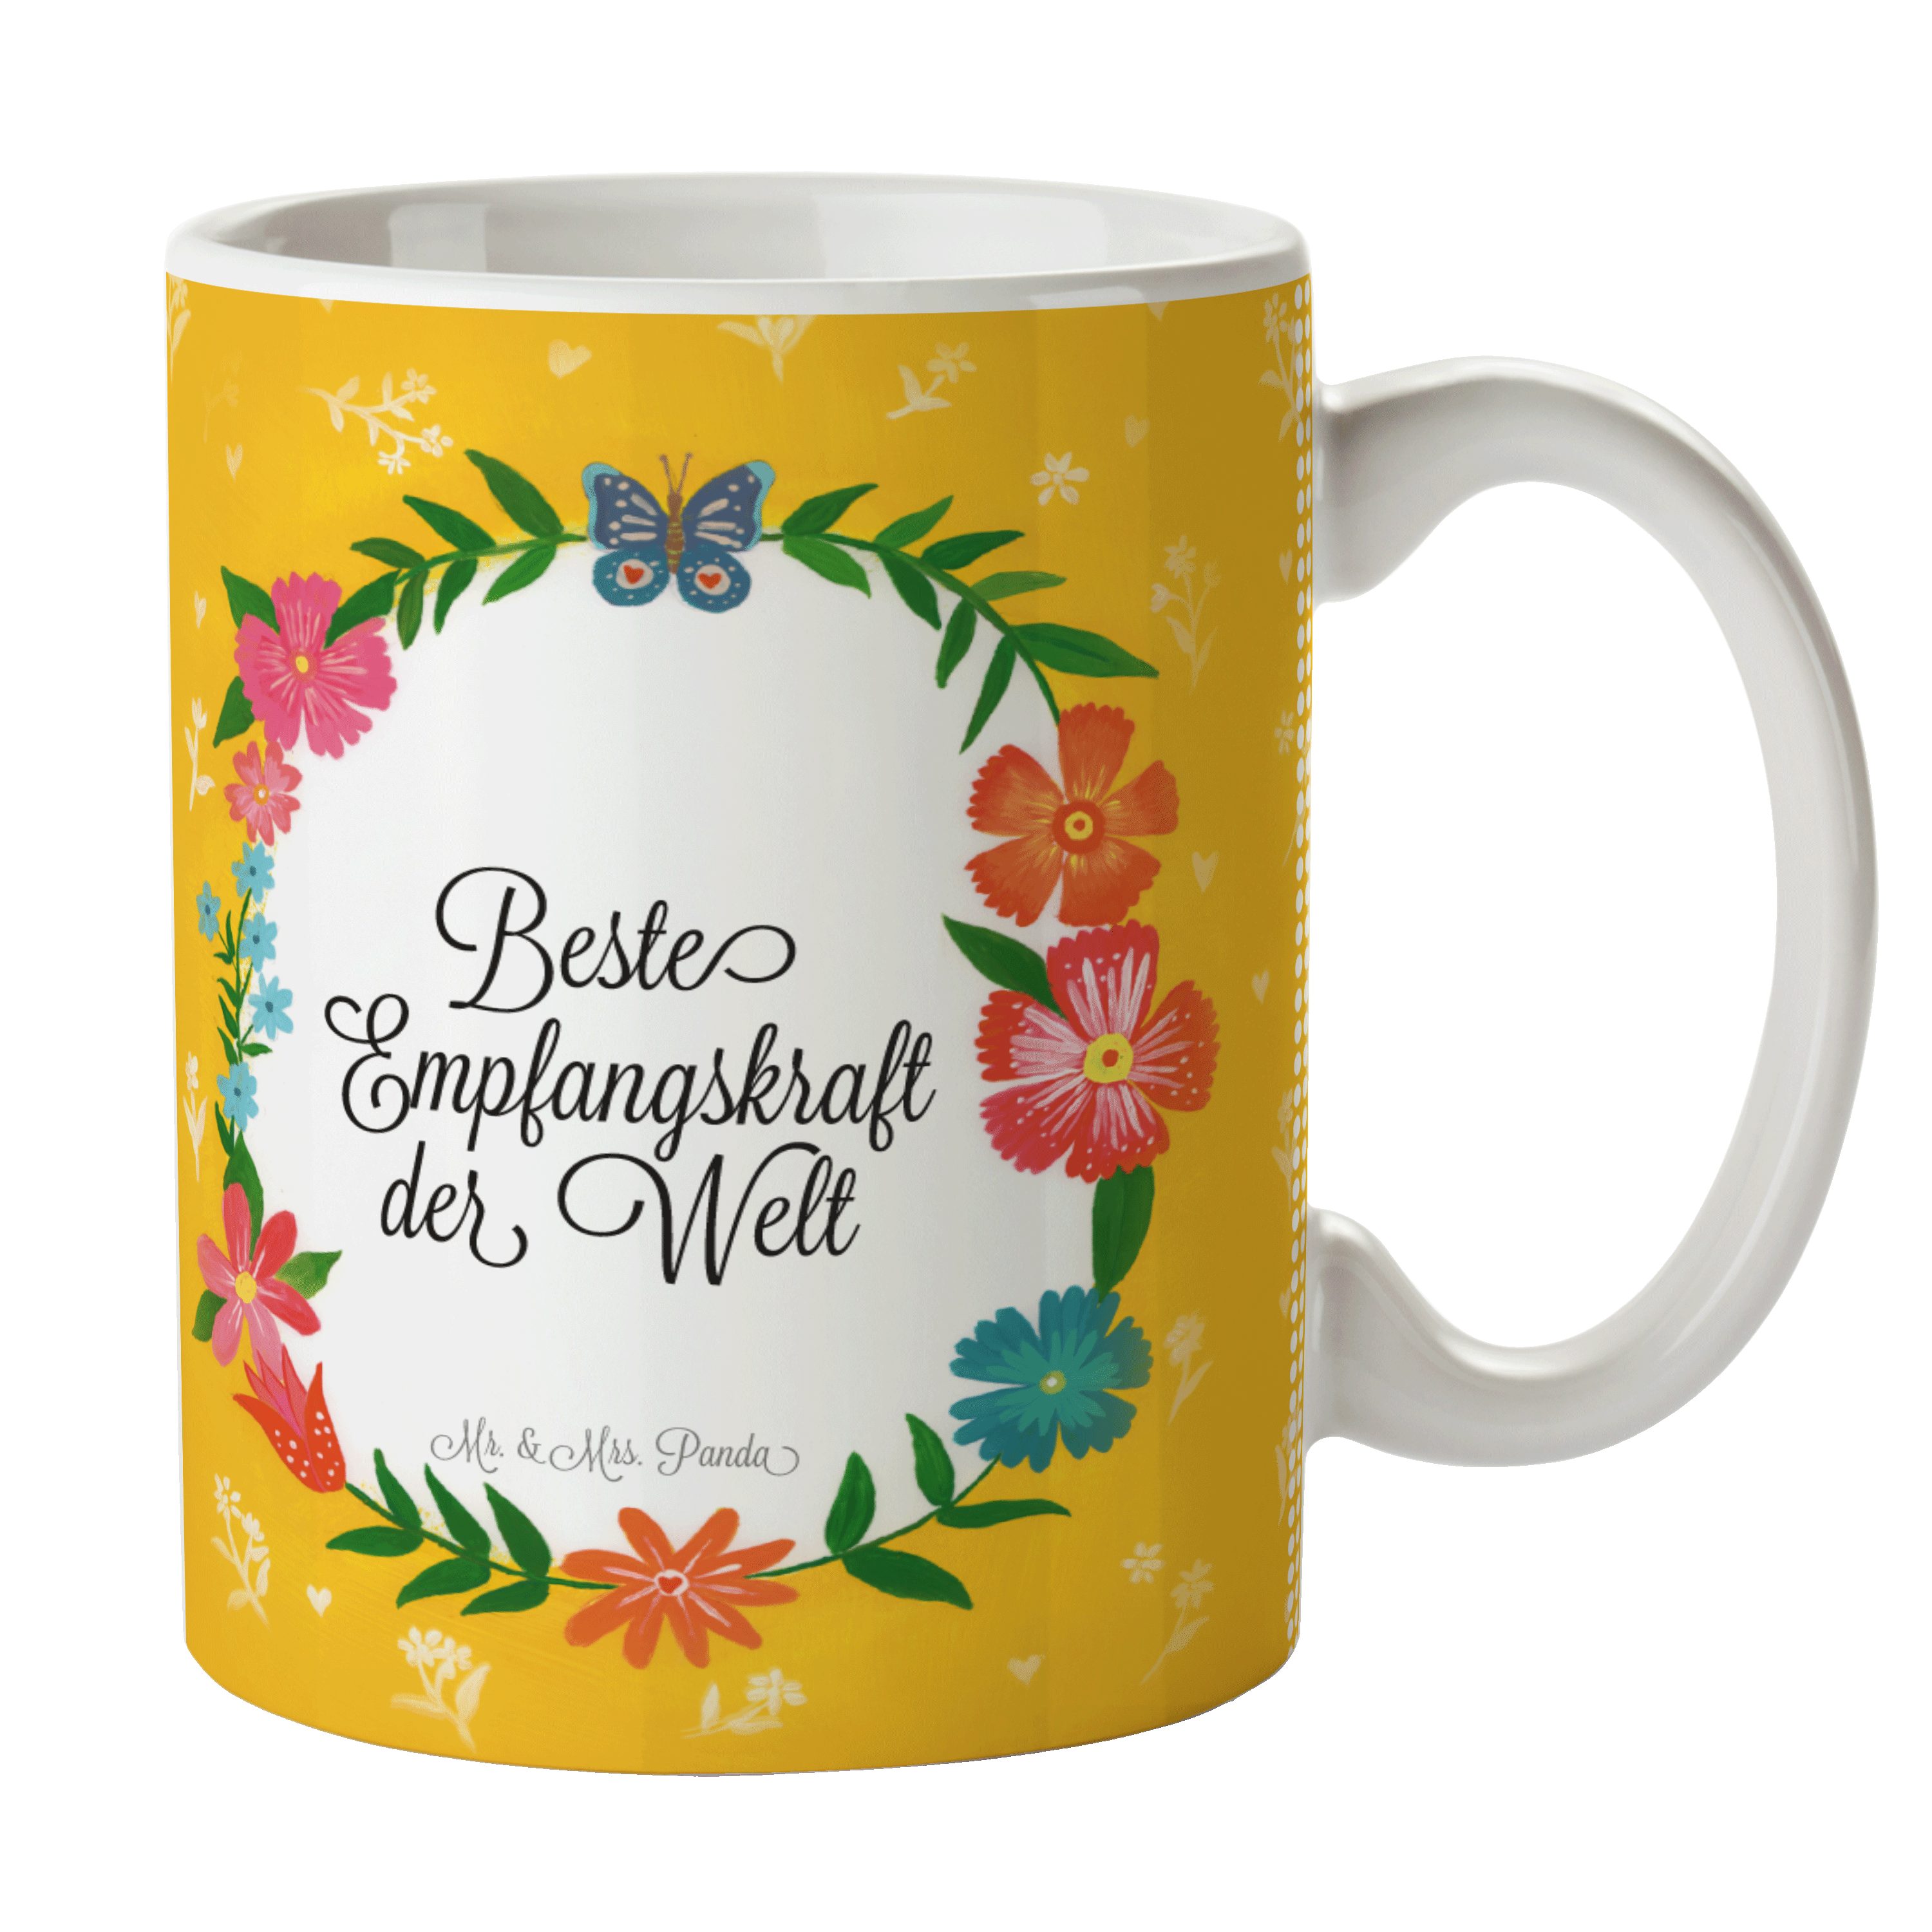 Mr. & Mrs. Panda Tasse Empfangskraft - Geschenk, Gratulation, Kaffeebecher, Geschenk Tasse, Keramik | Tassen